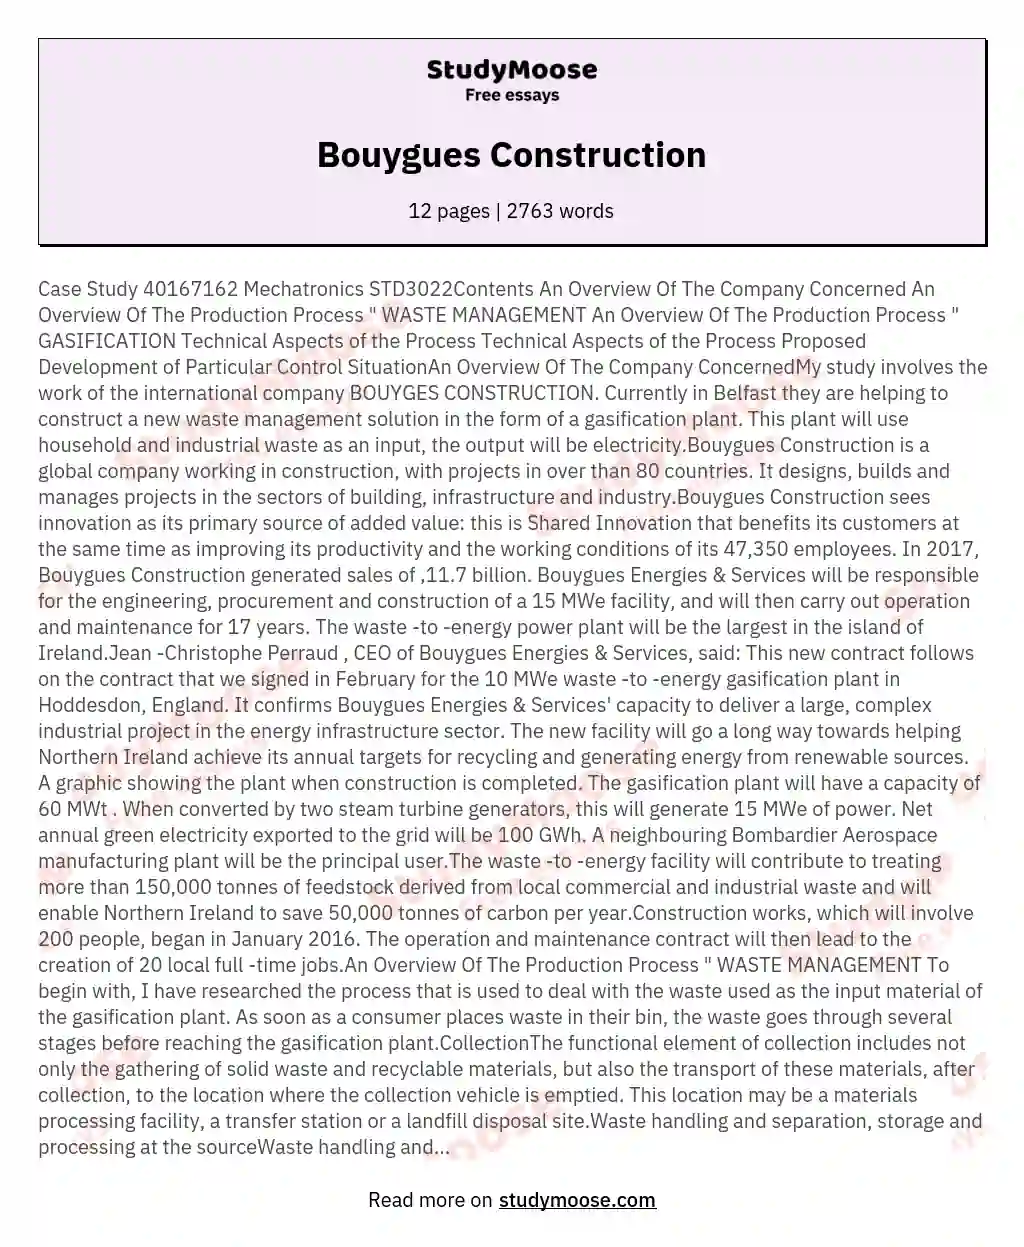 Bouygues Construction essay